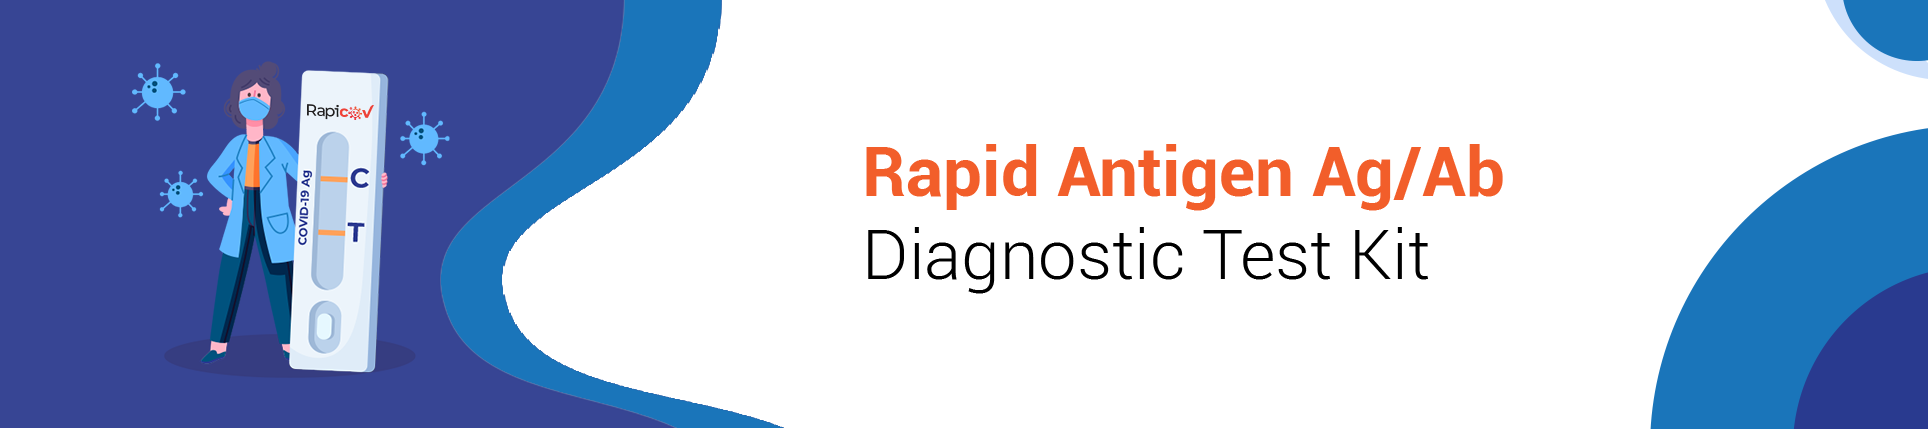 Rapid Abtigen/Antibody Testing Kit